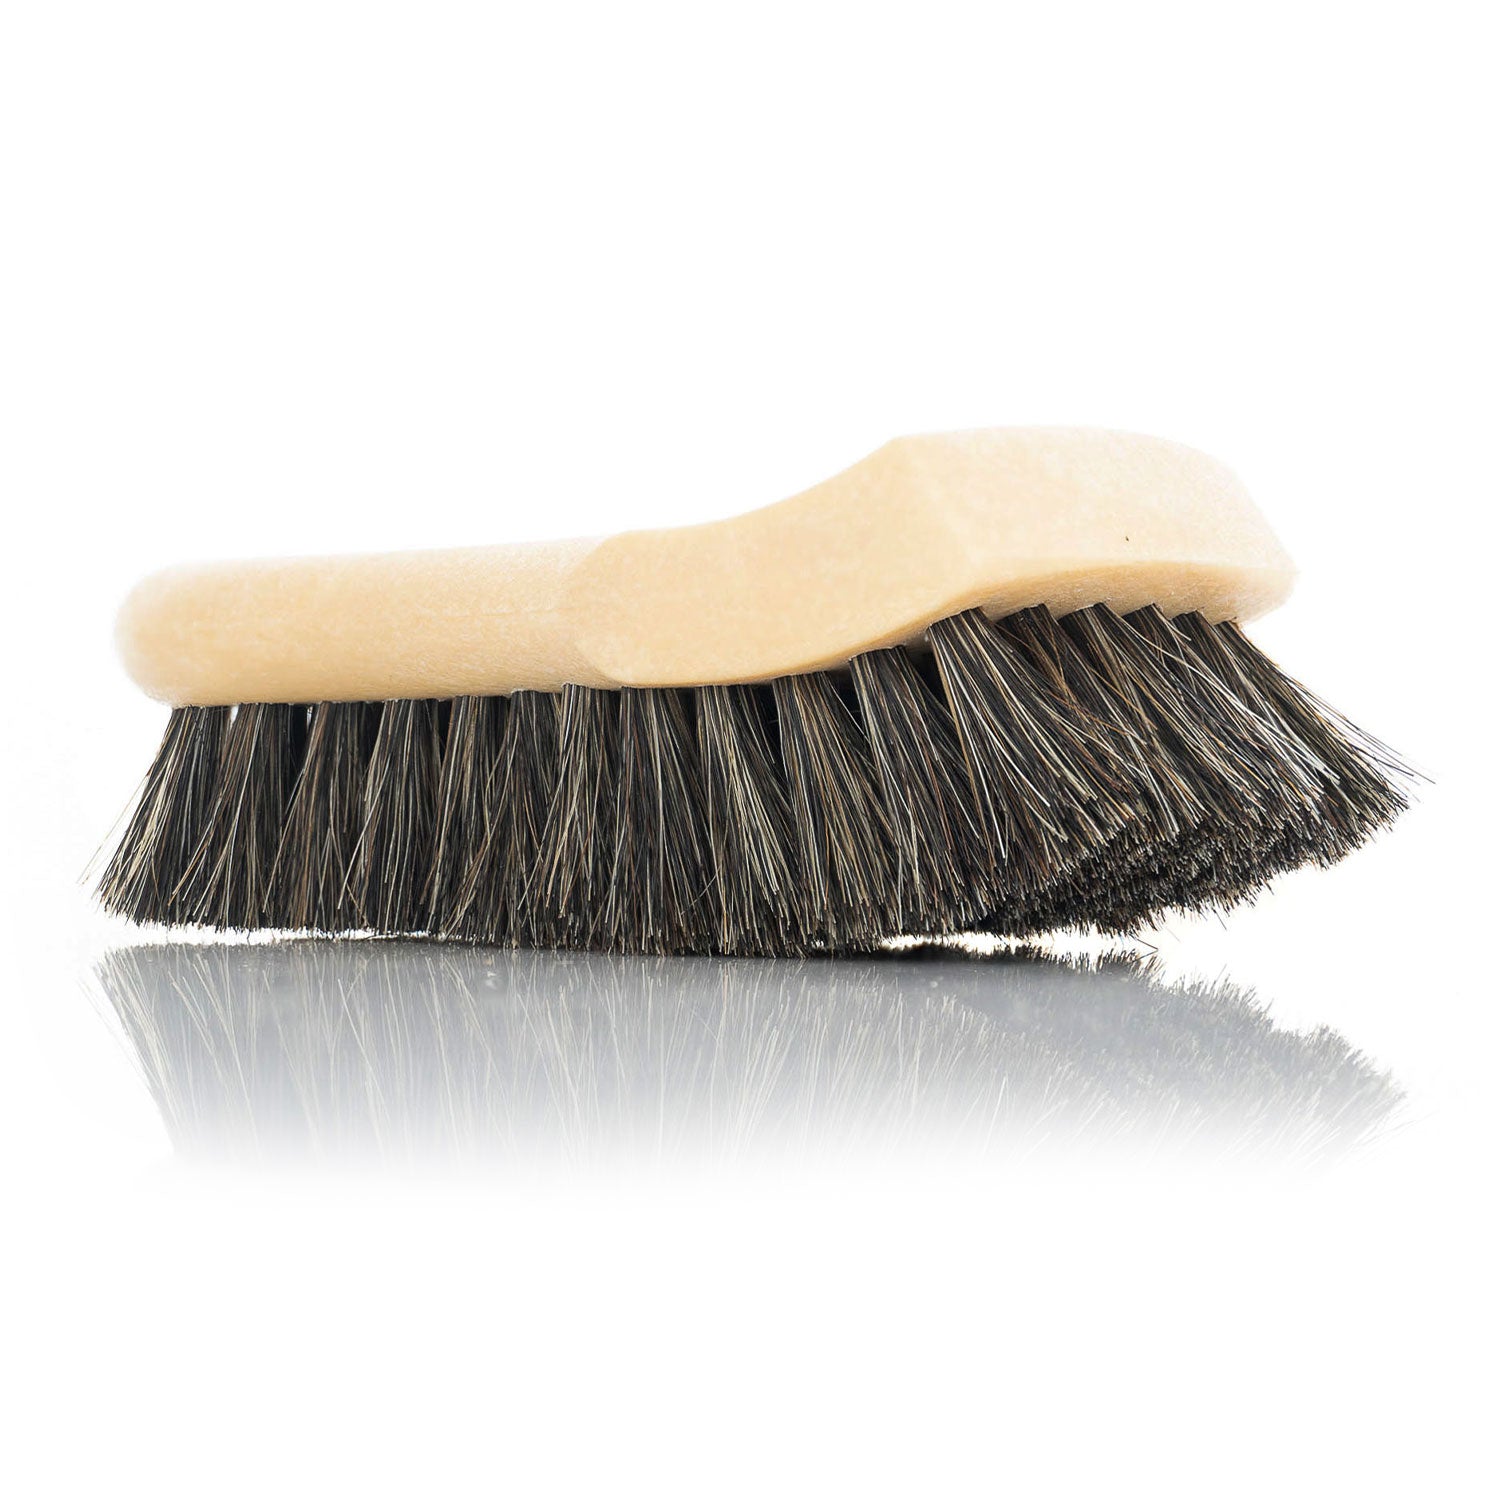 Upholstery Cleaner Scrub Brush Set Cleaning Brush and Horsehair Detailing Brush